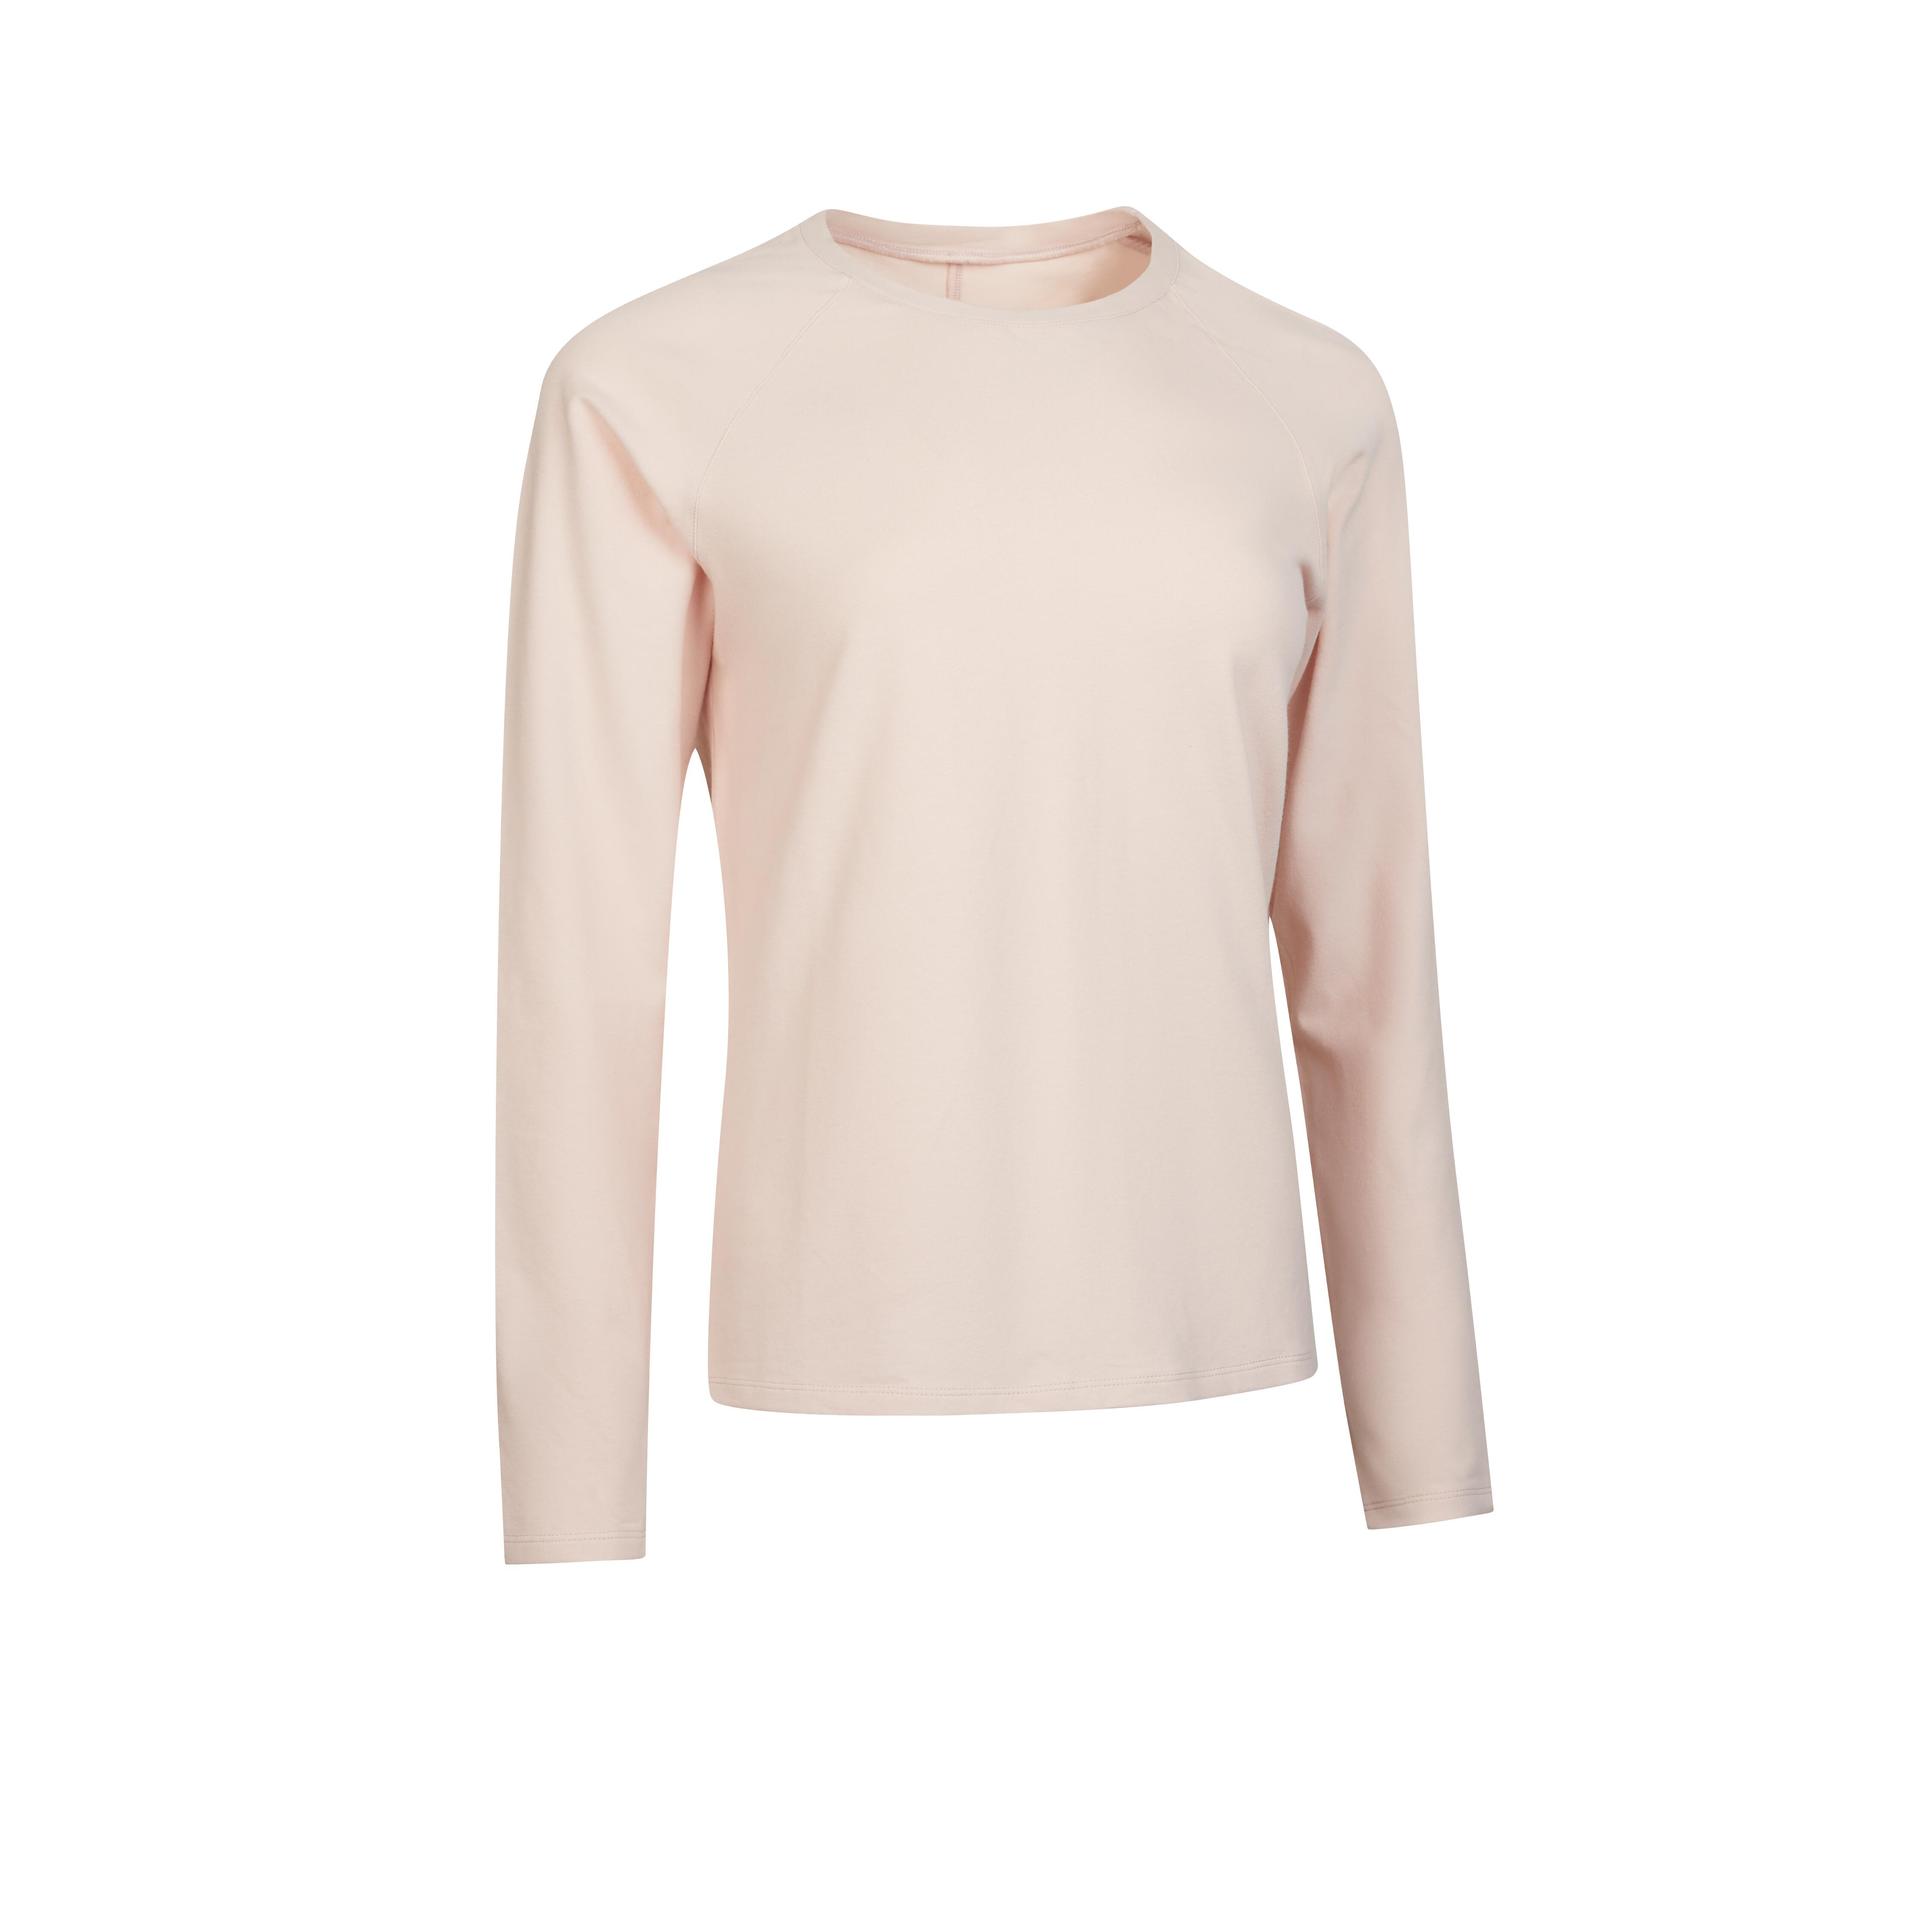 women's long-sleeved fitness t-shirt 500 - pink